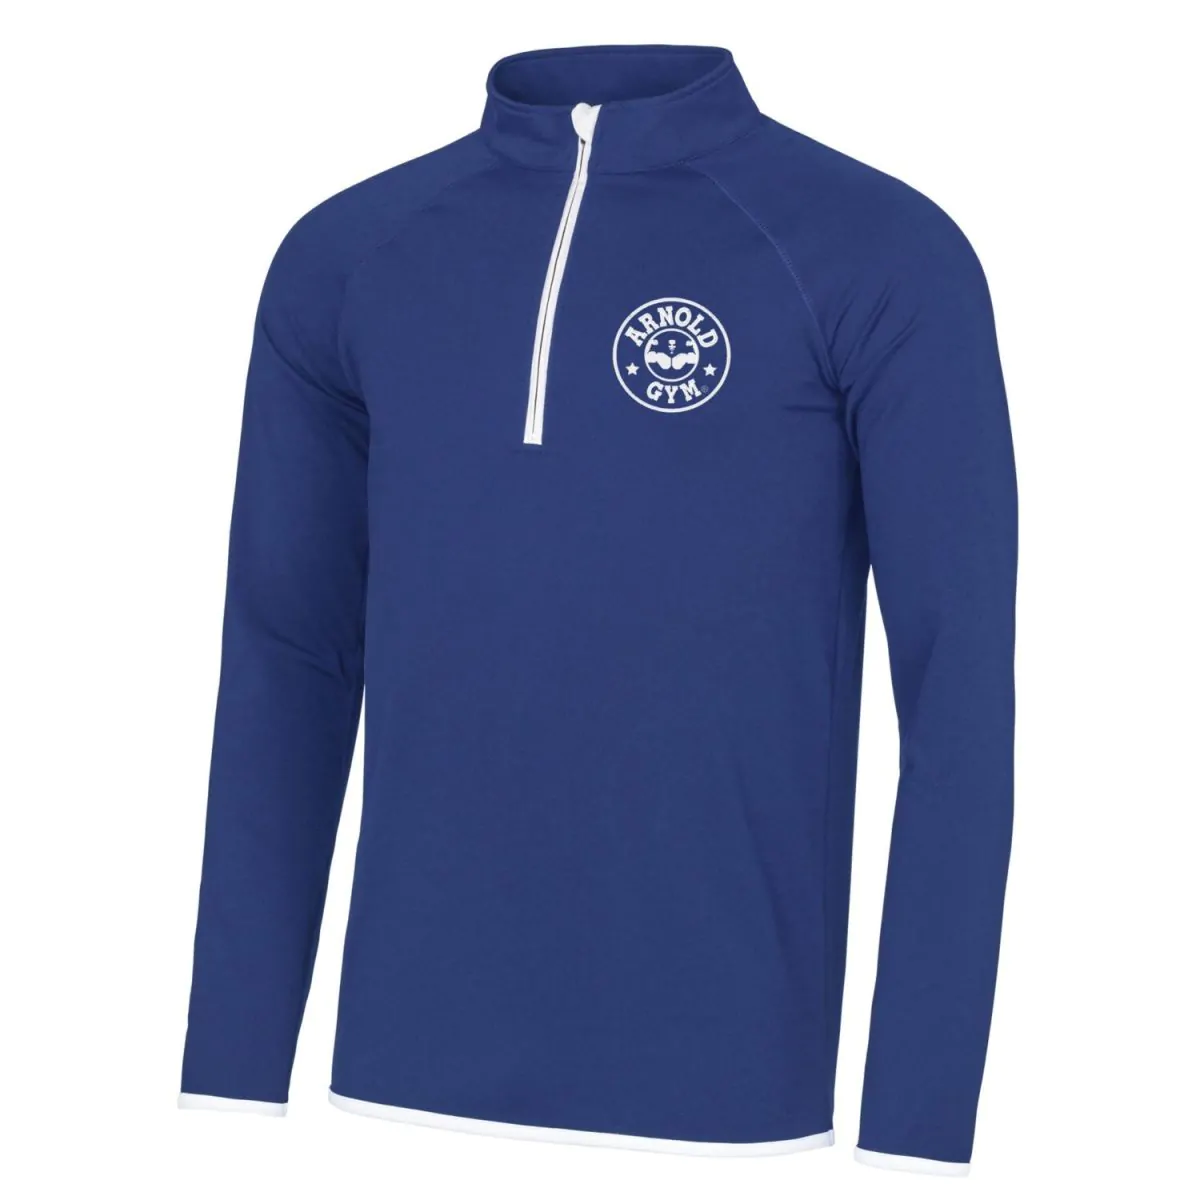 0000414 arnold gym 12 zip long sleeve tech gym workout blue white sweatshirt top